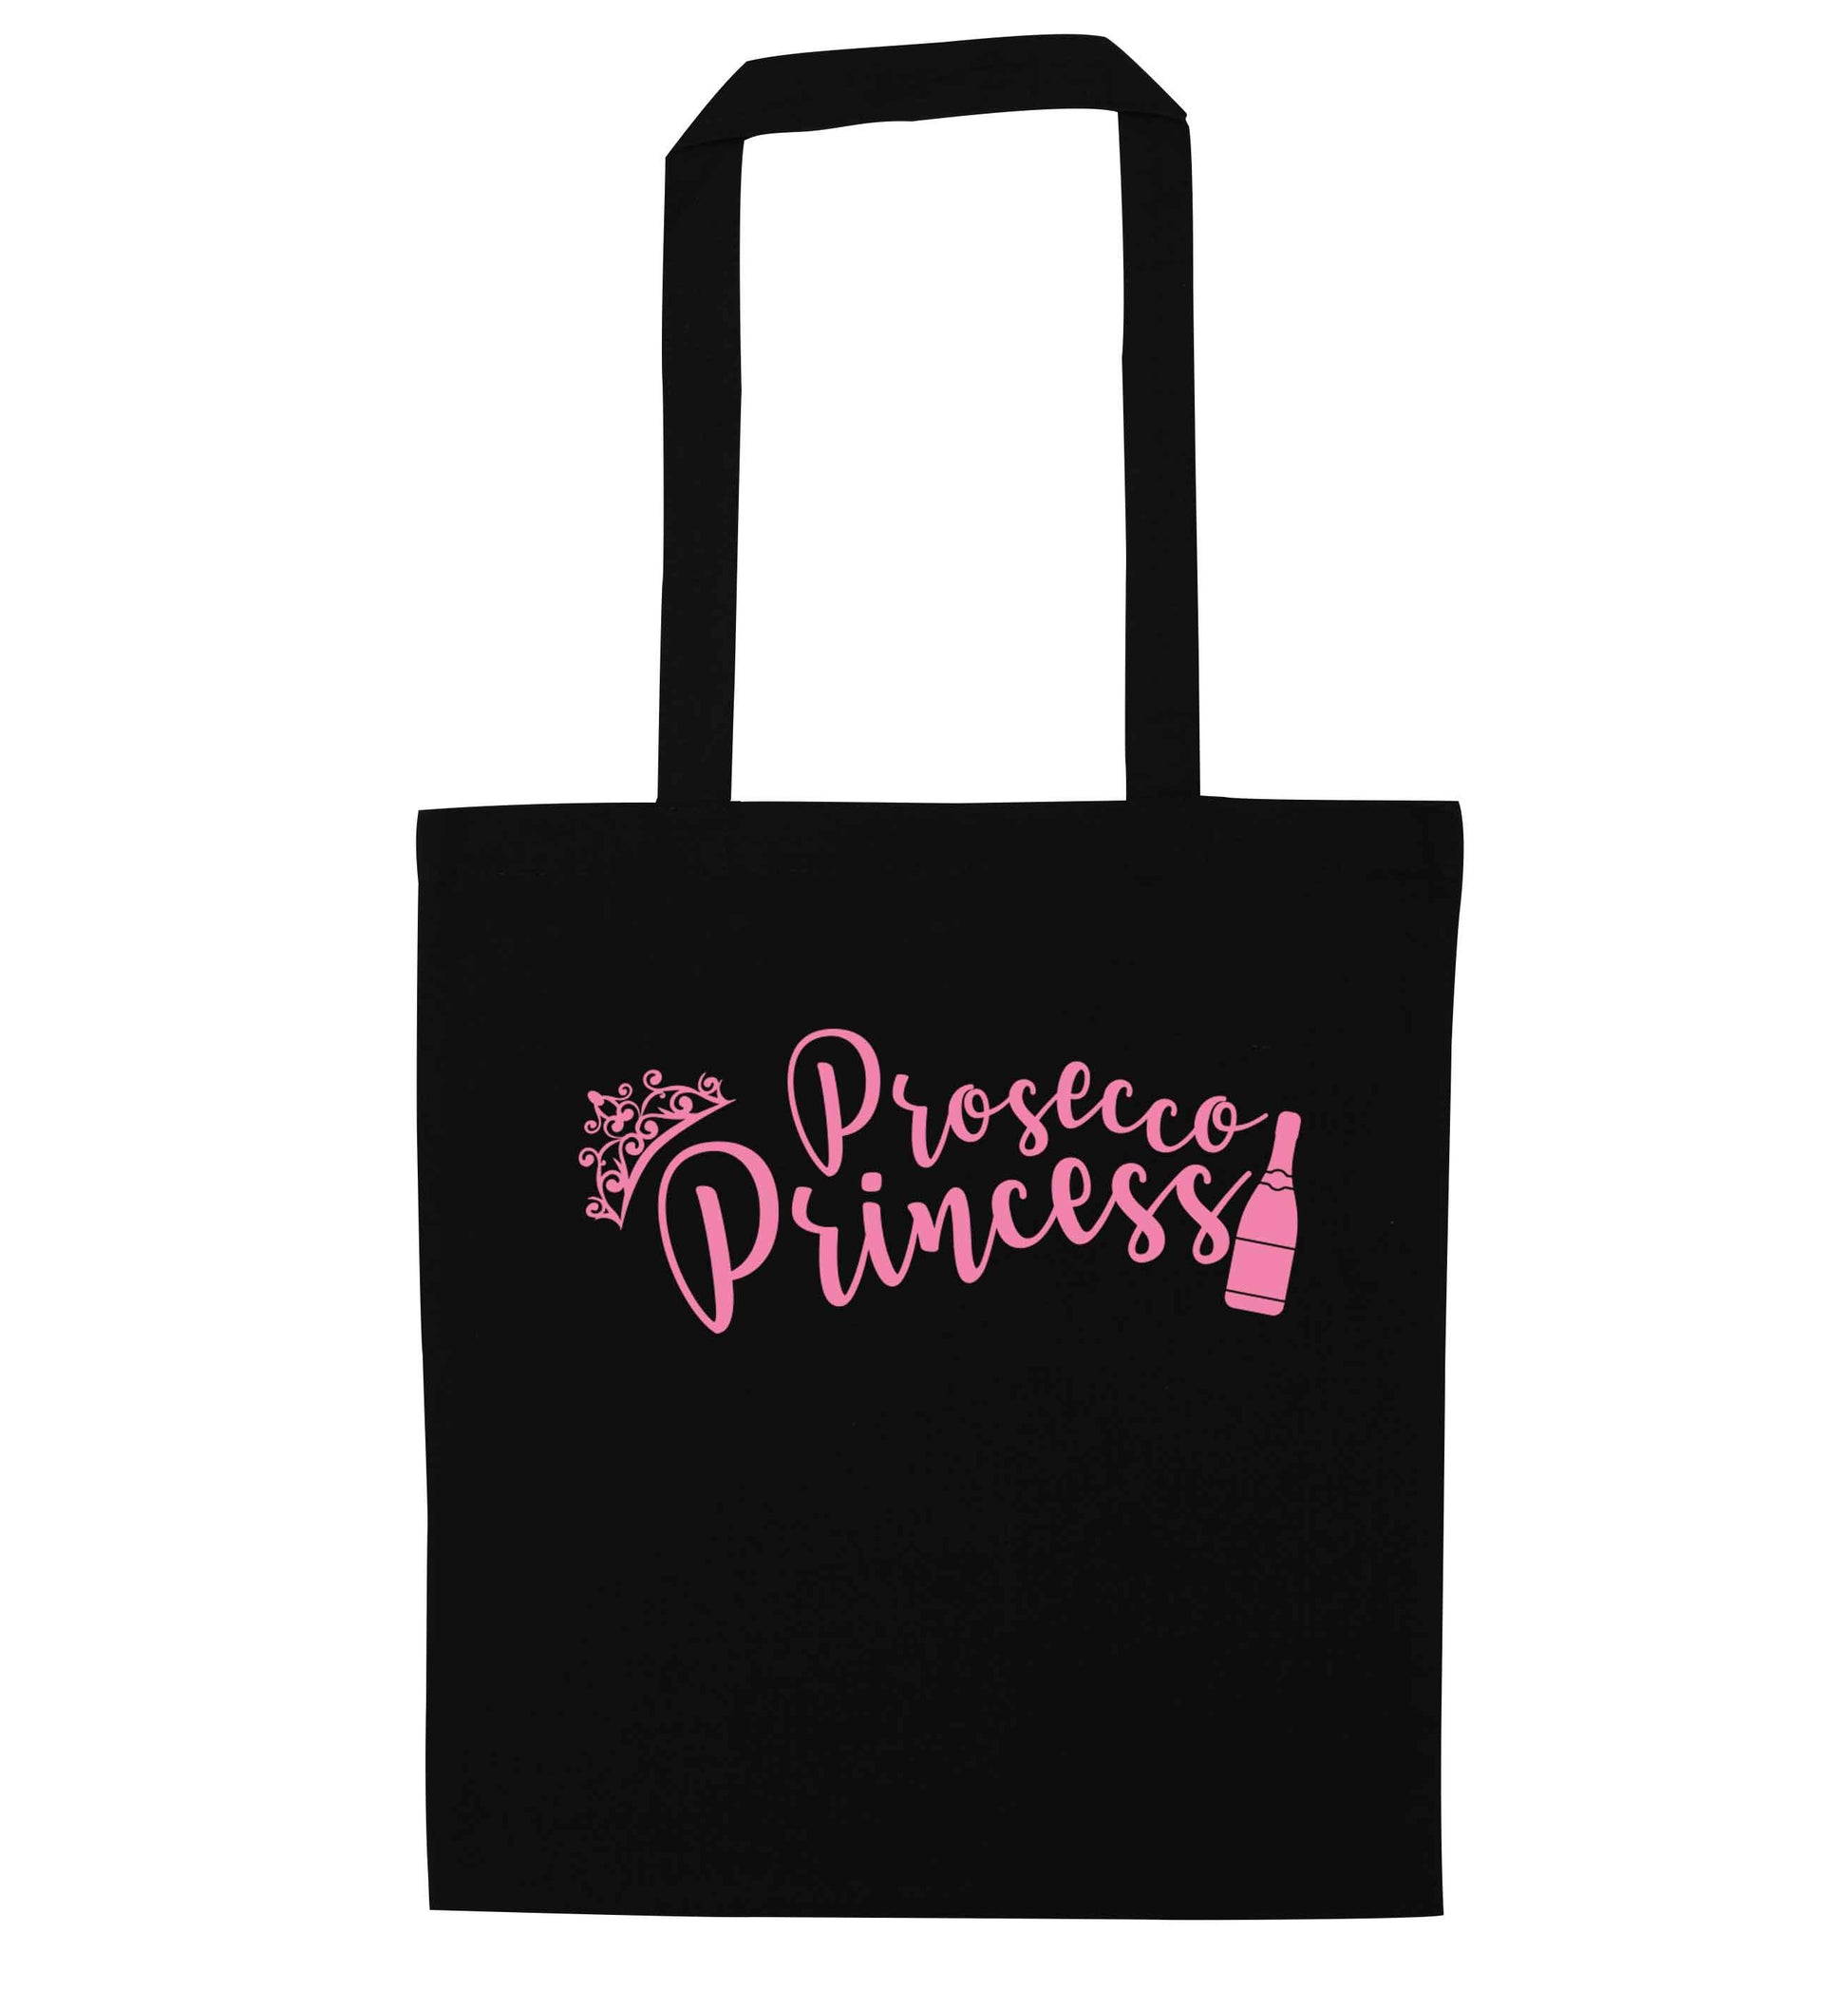 Prosecco princess black tote bag